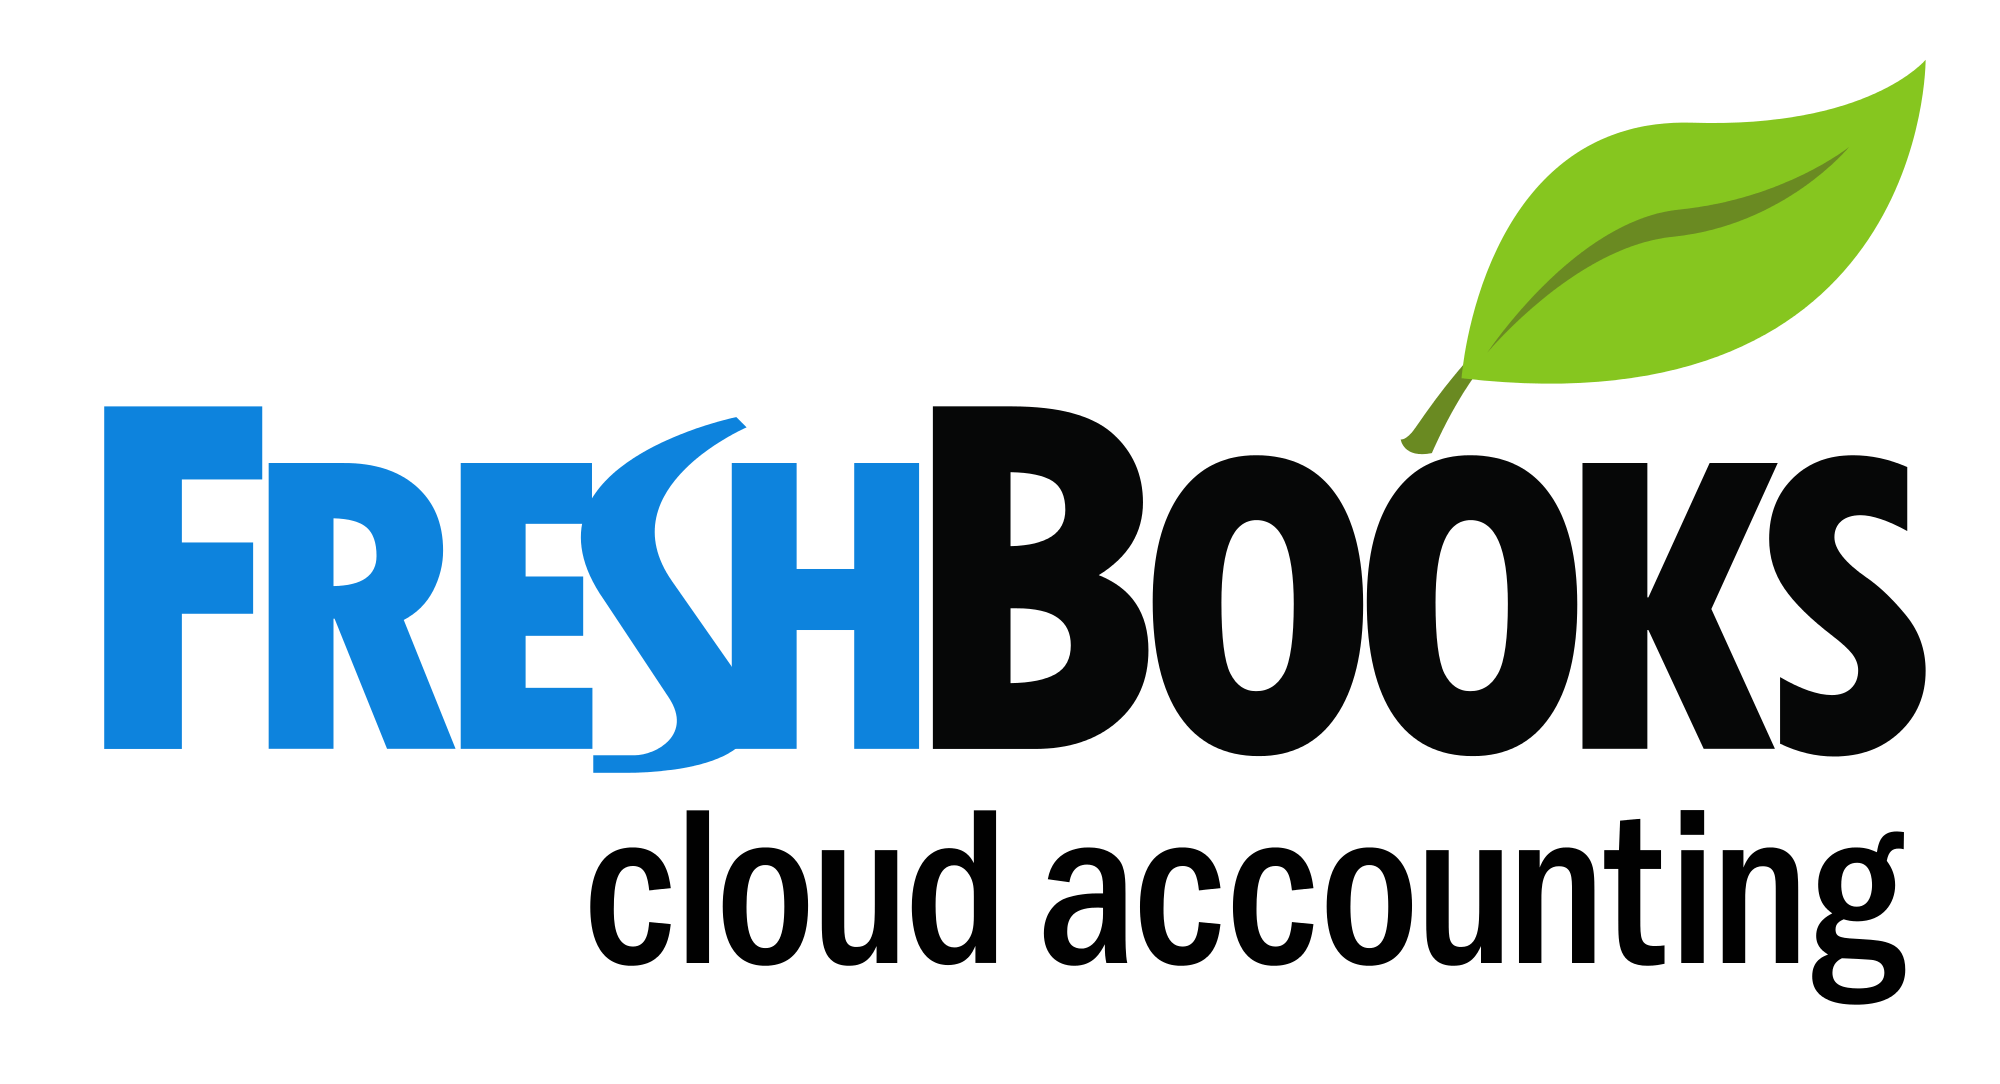 Cloud App Logo - File:FreshBooks Cloud Accounting Logo.svg - Wikimedia Commons